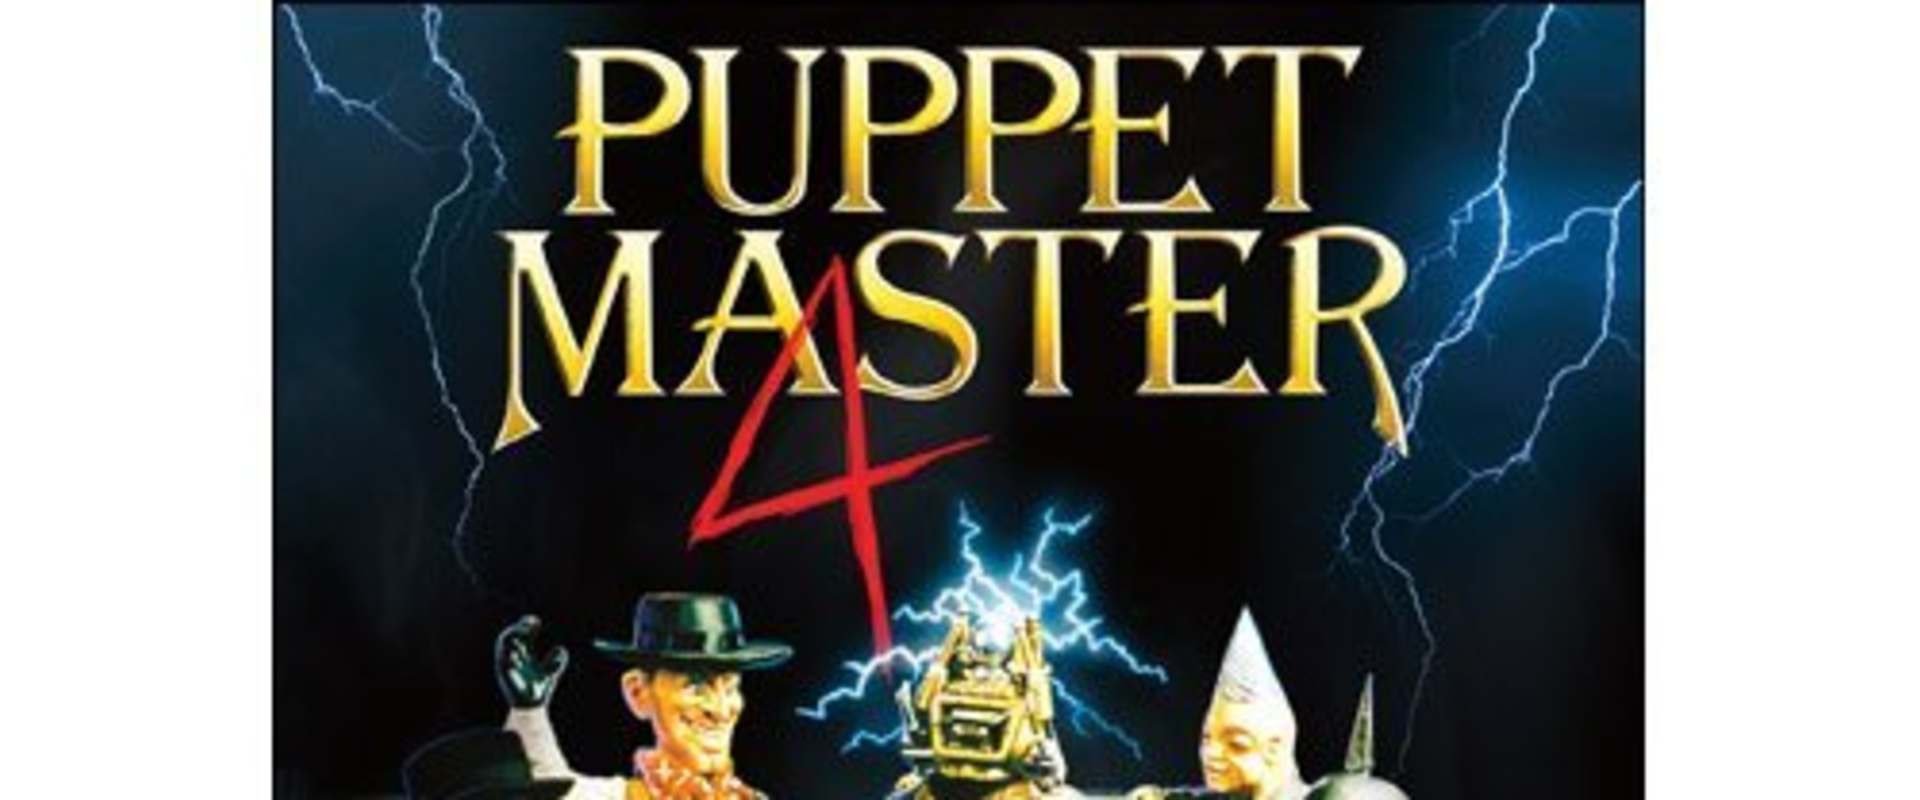 Puppet Master 4 background 1